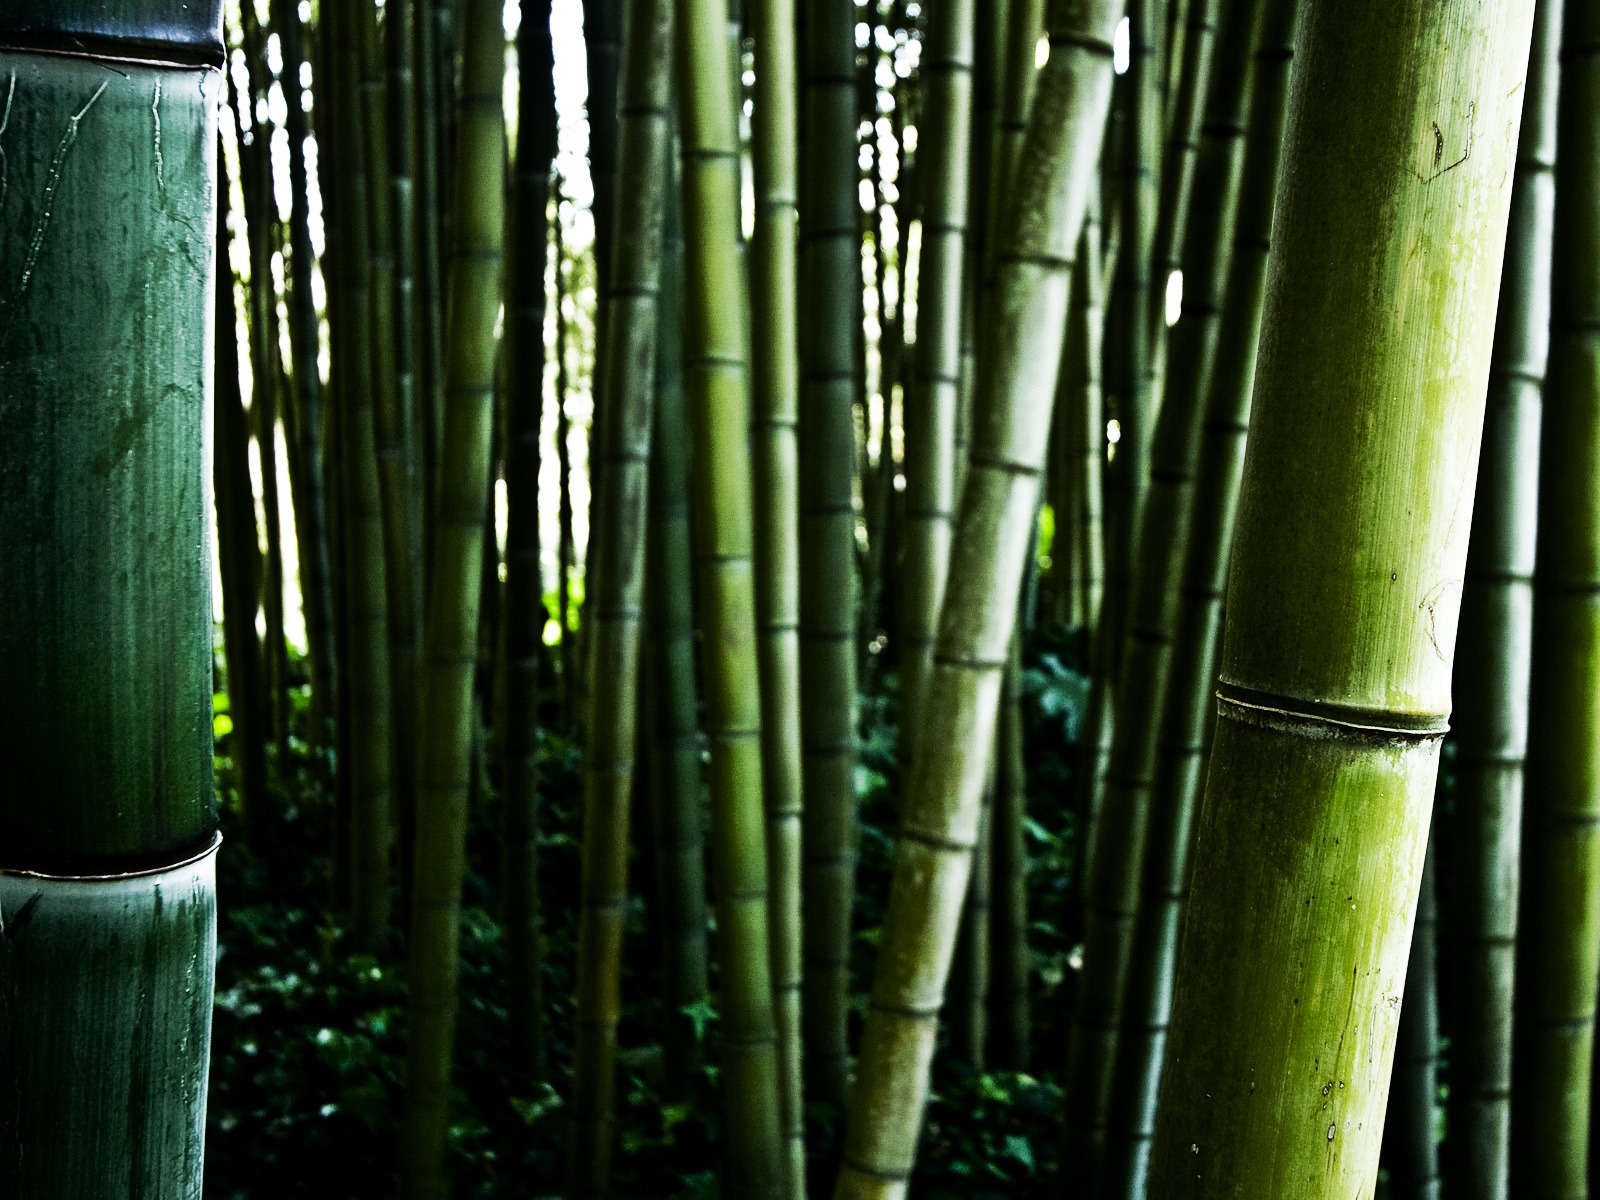 Bamboo stalks 1600 x 1200 Wallpaper